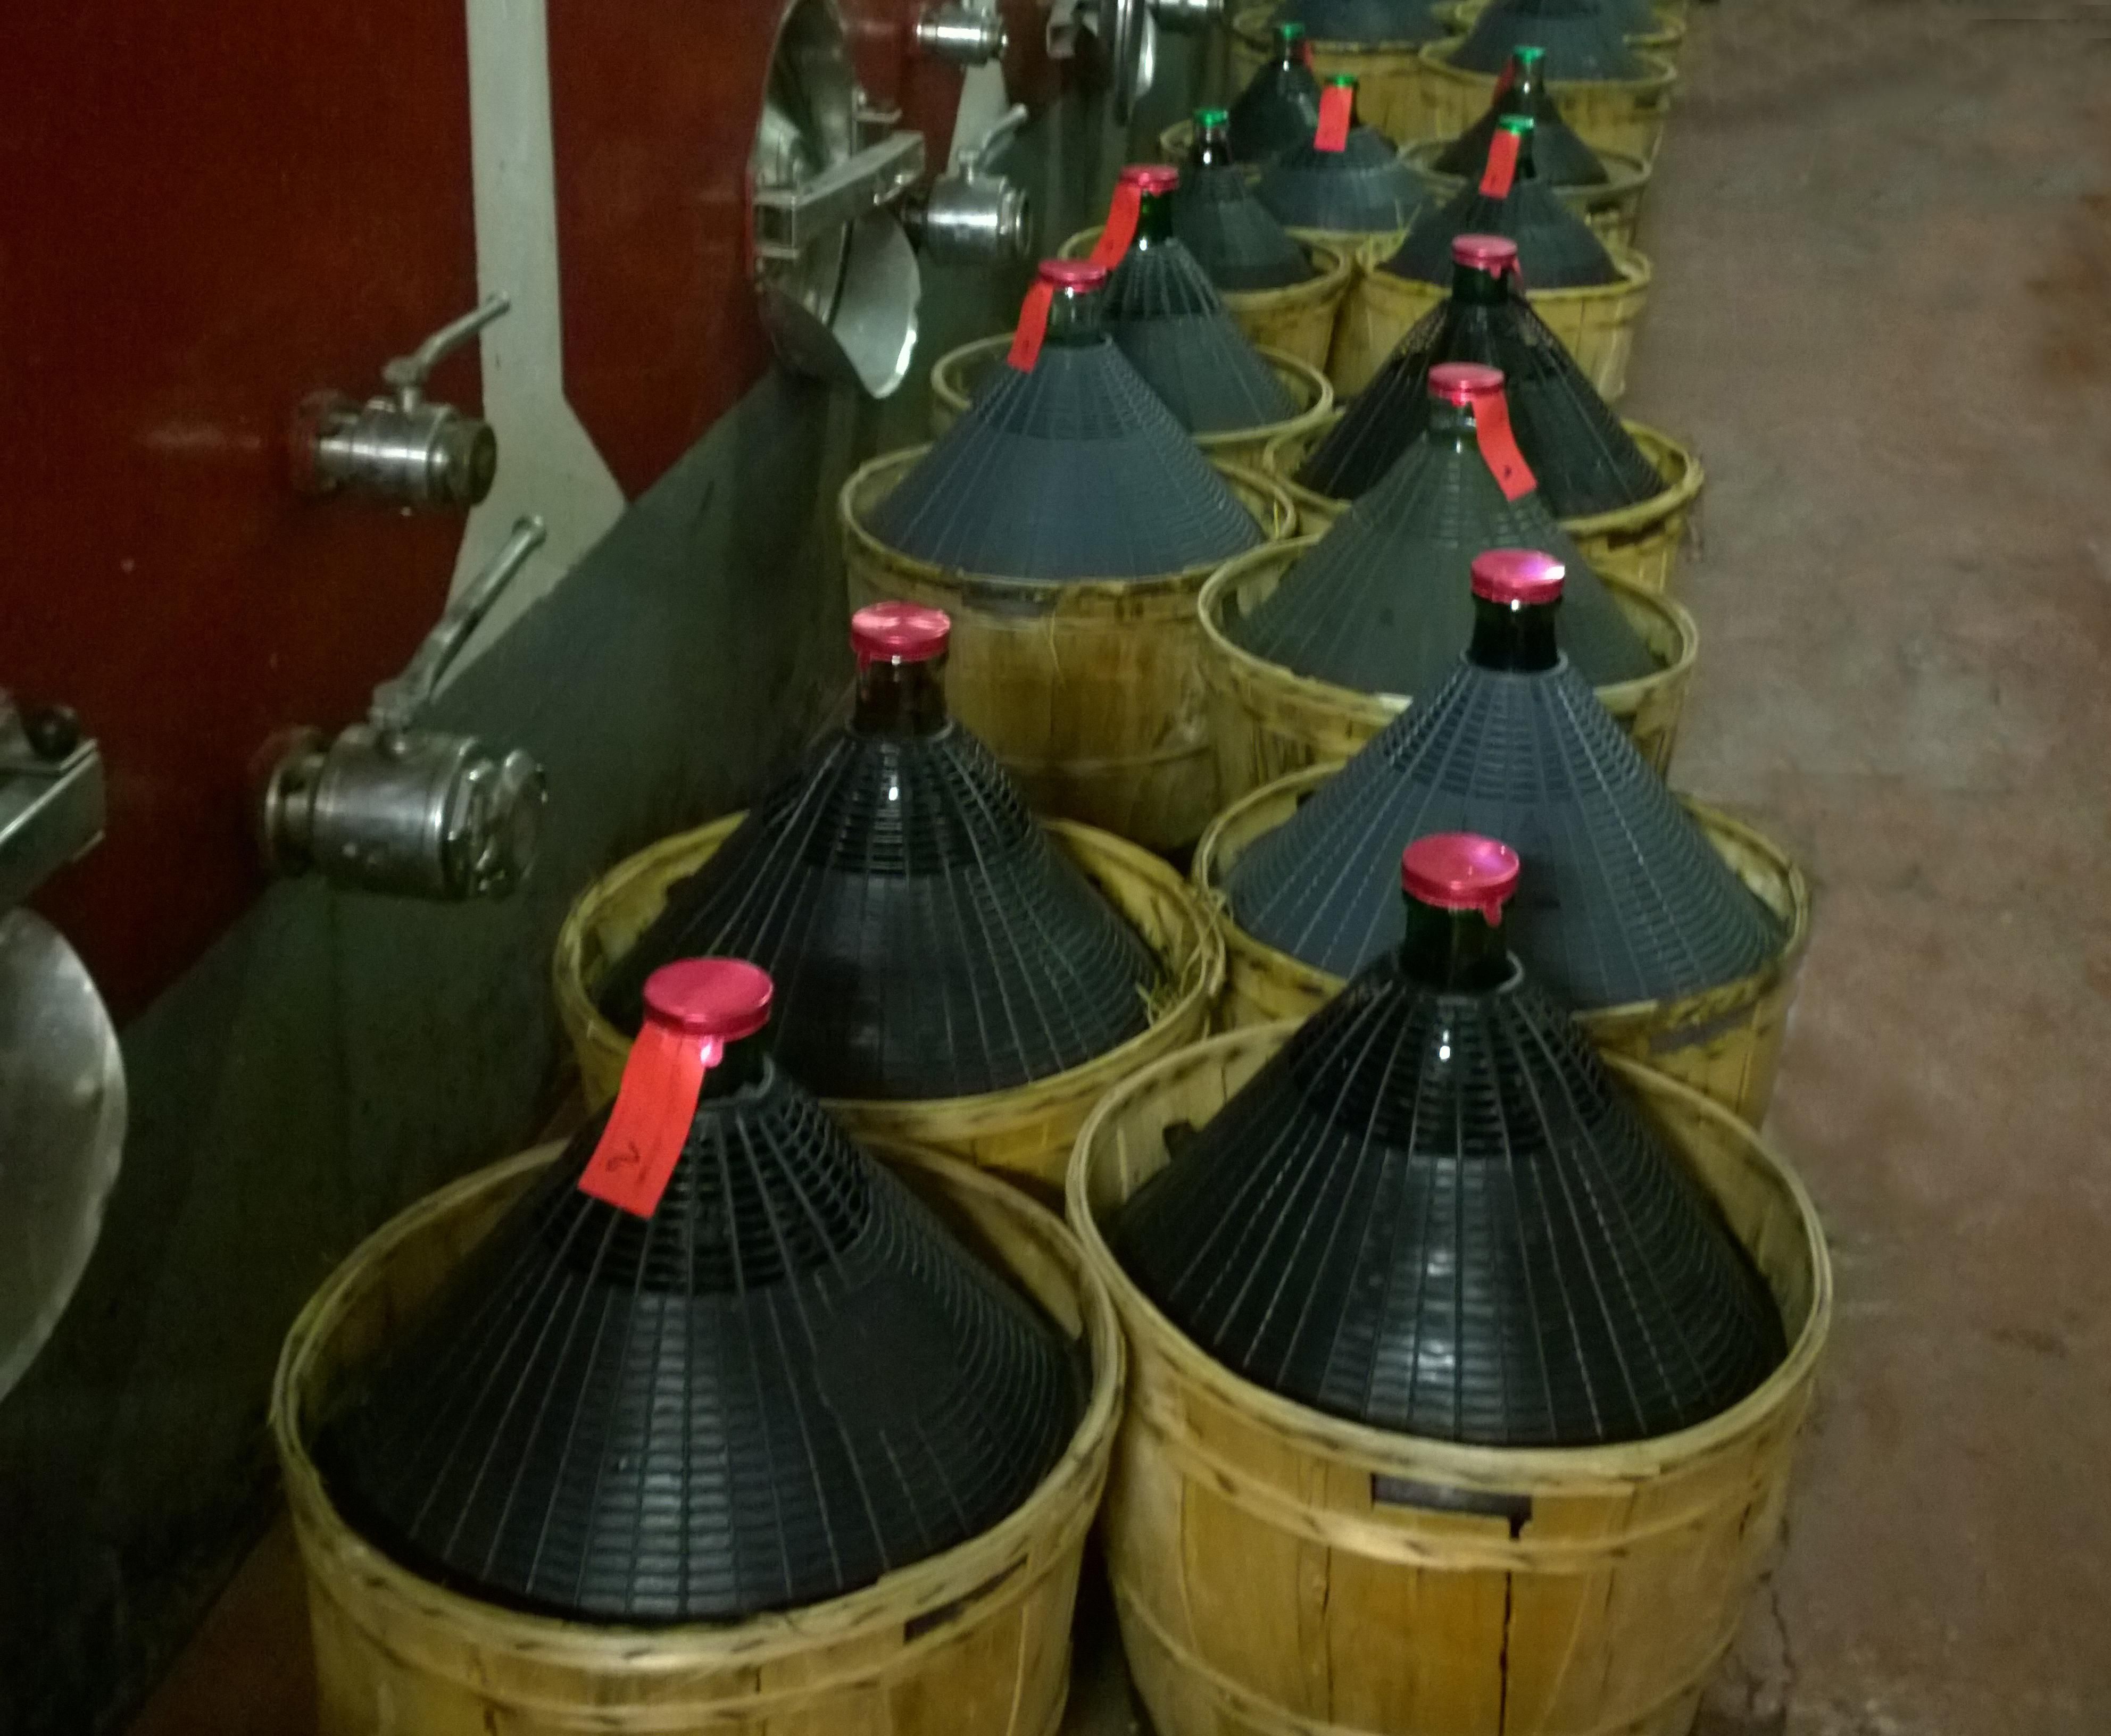 This is what “damigiane” looks like, big jugs